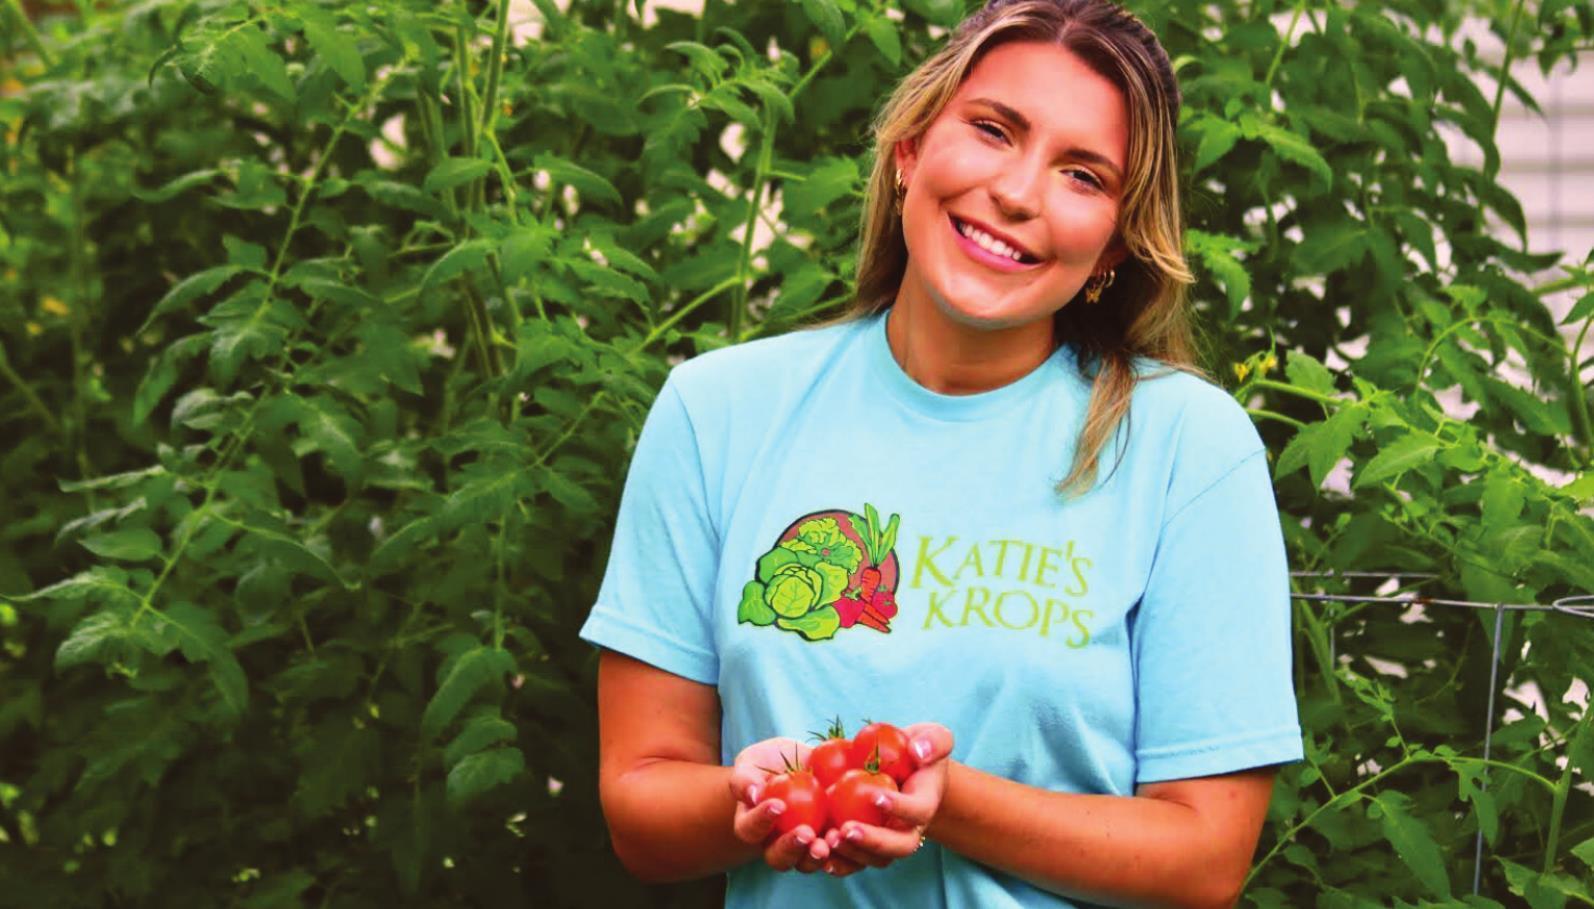 Garden Treasure Tomato: A star of Katie’s Krops and your garden, too